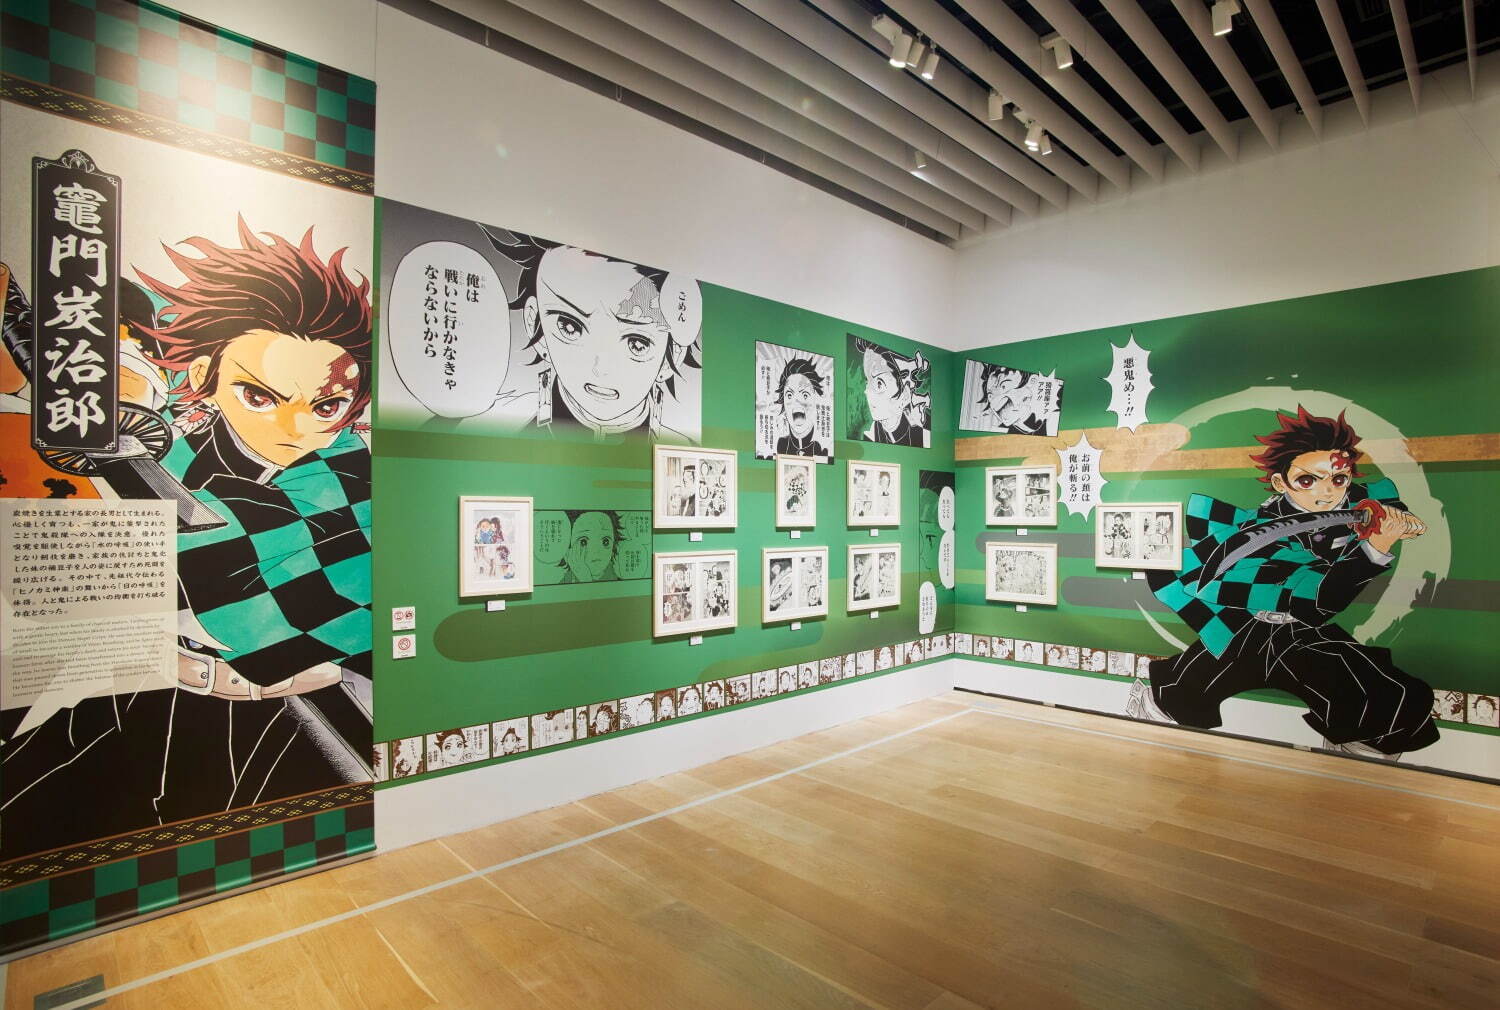 FEATURE: Charlotte Original Art Exhibition at Tokyo Anime Center